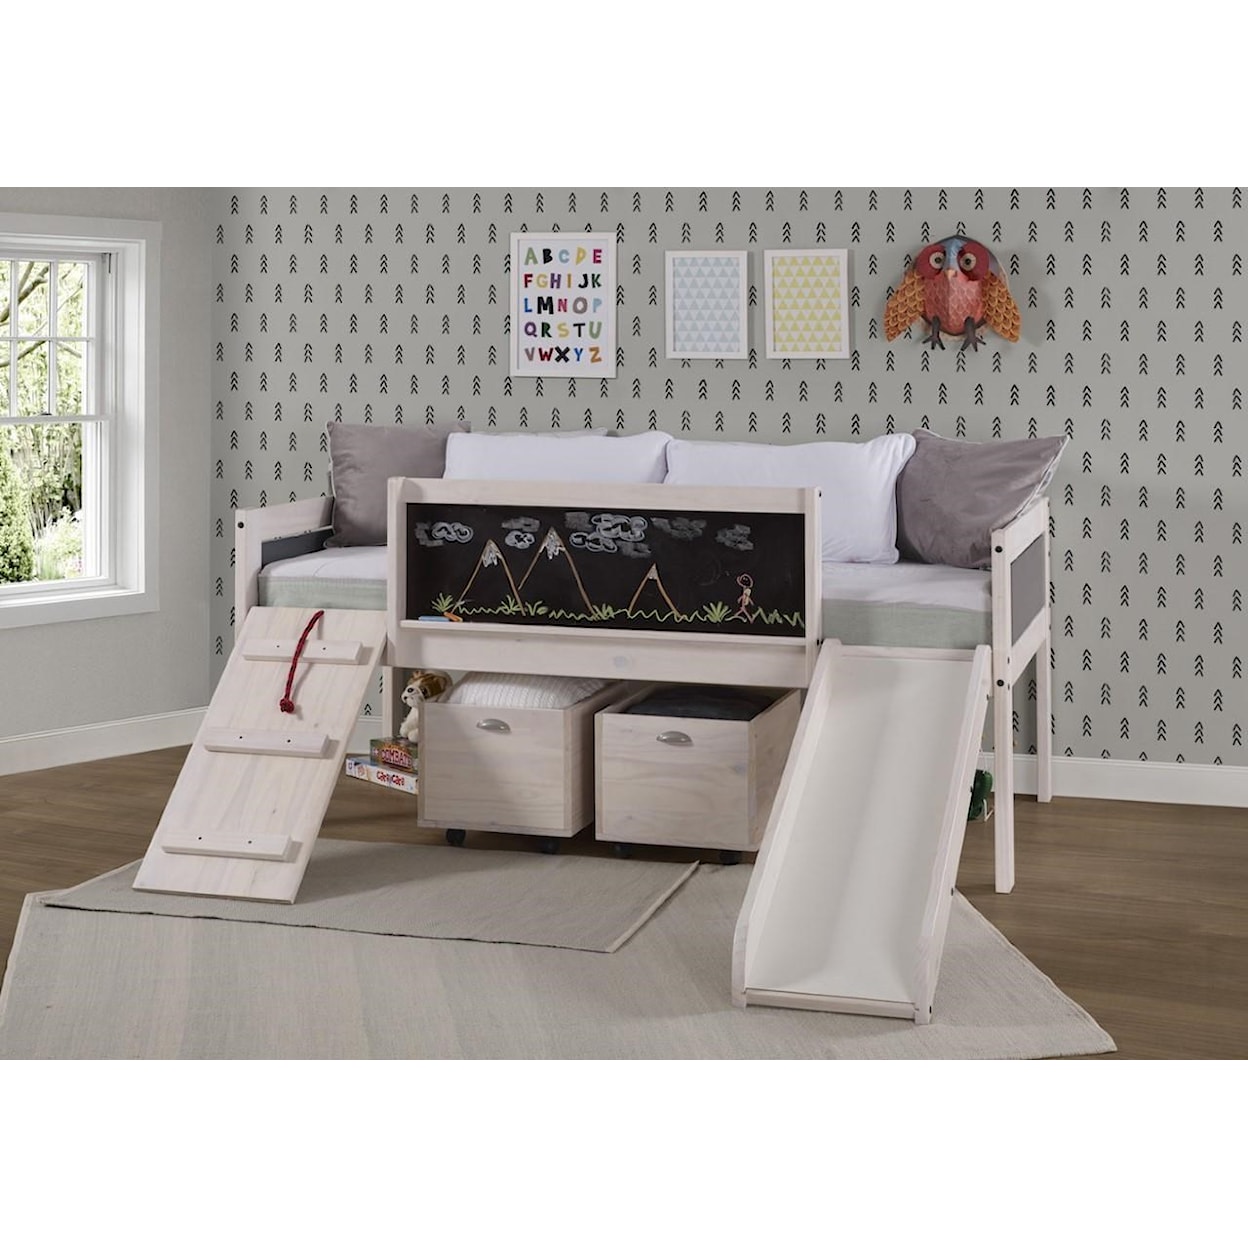 Donco Trading Co Loft Beds Twin Art Junior Low Loft Bed